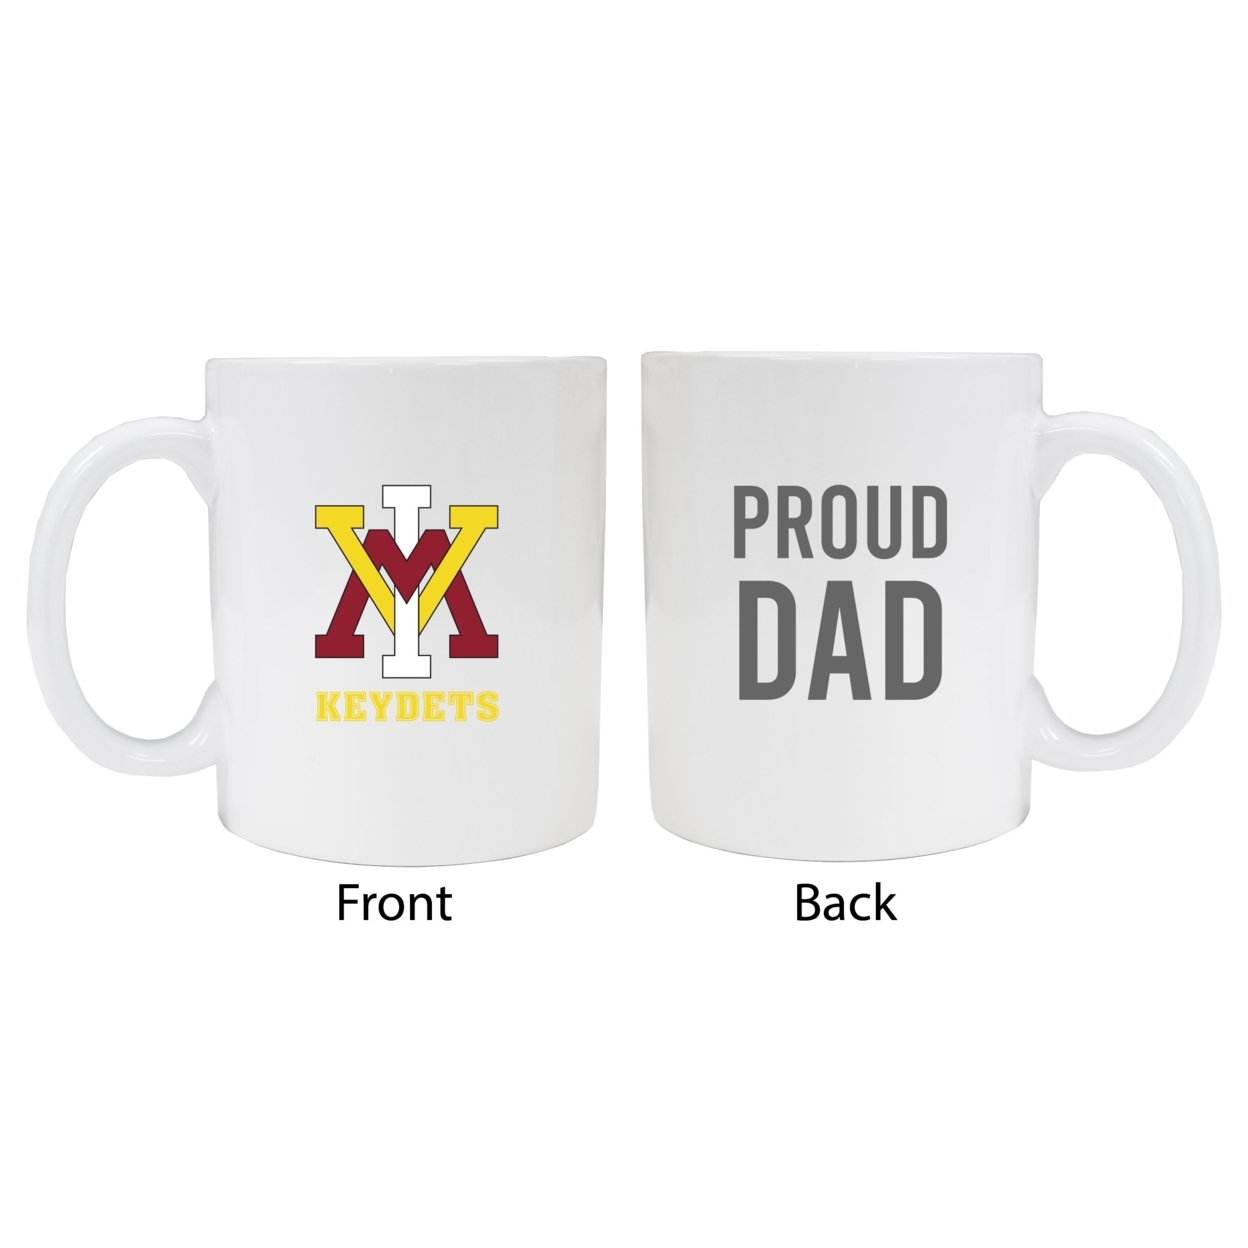 VMI Keydets Proud Dad Ceramic Coffee Mug - White